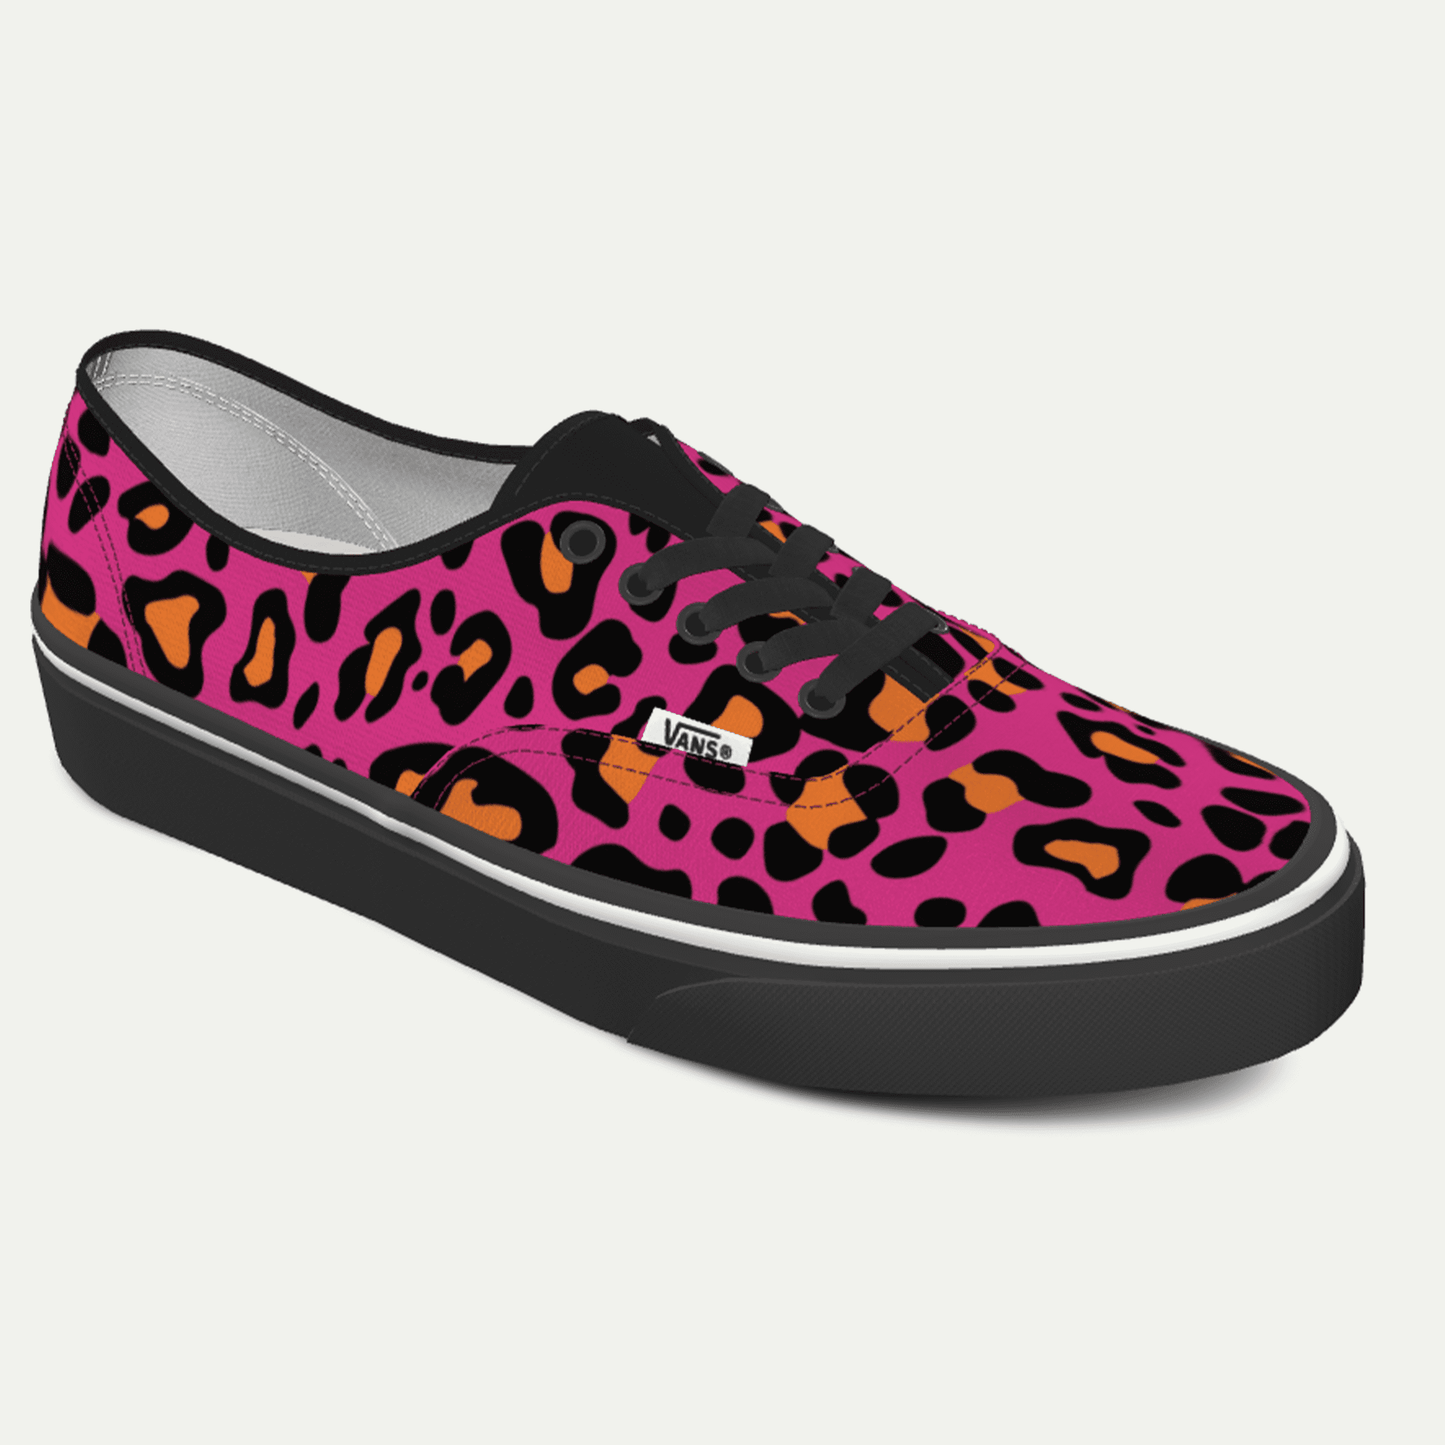 Funky Yeti x Vans Customs Authentic Shoes - Pink Leopard